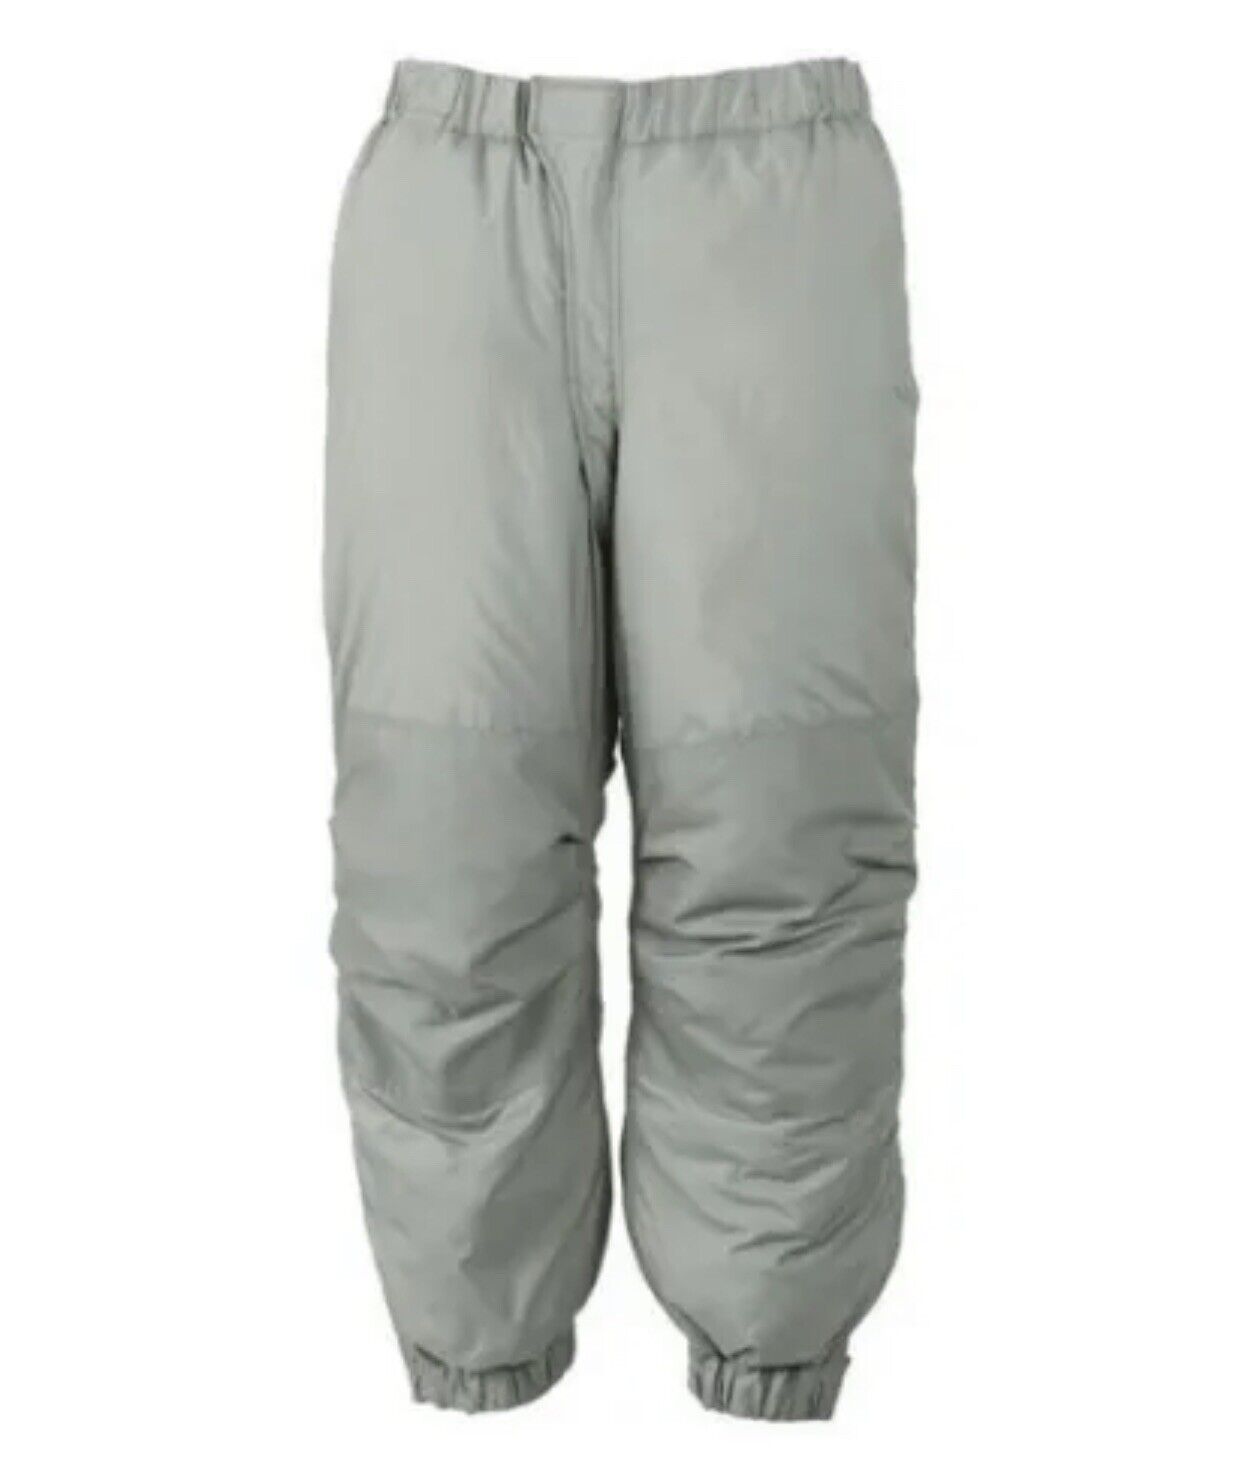 NEW Gen 3 Level 7 Primaloft Extreme Cold Weather Insulated Pant  Medium Regular